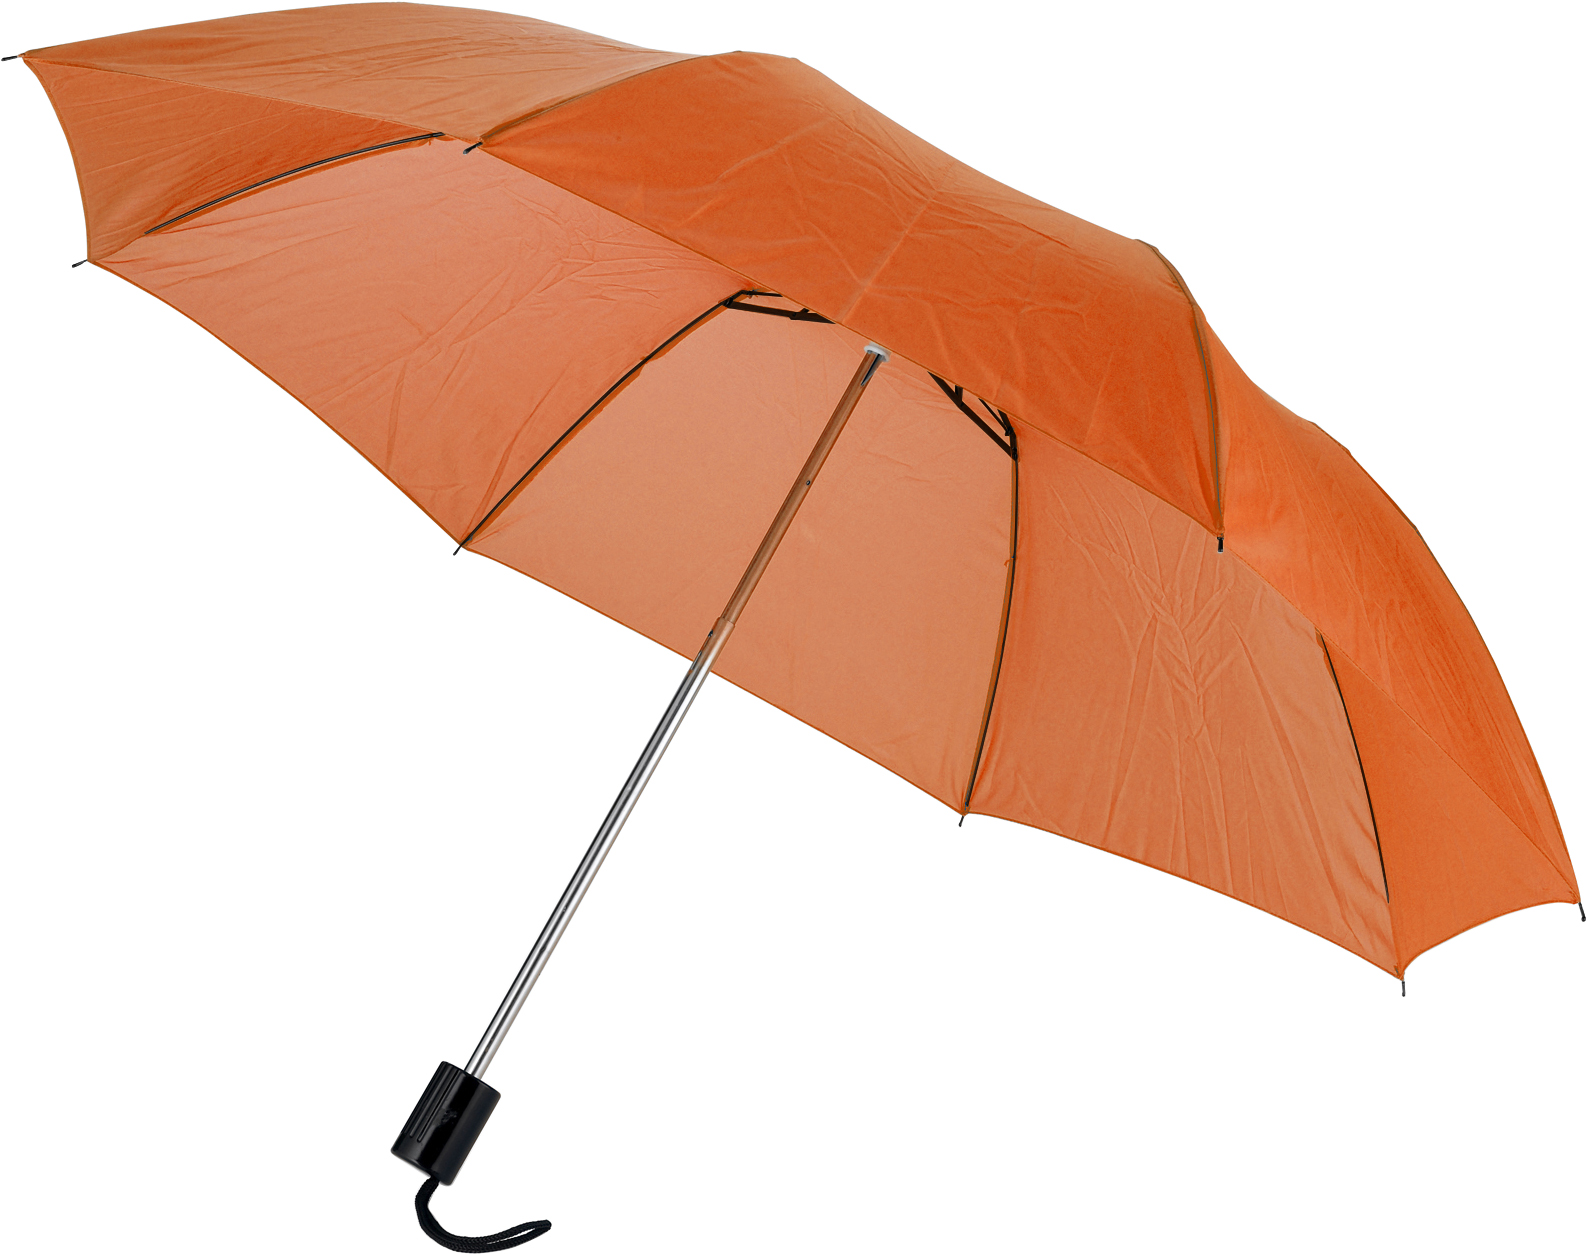 004092 007999999 3d090 ins det01 fal - Umbrella with silver underside